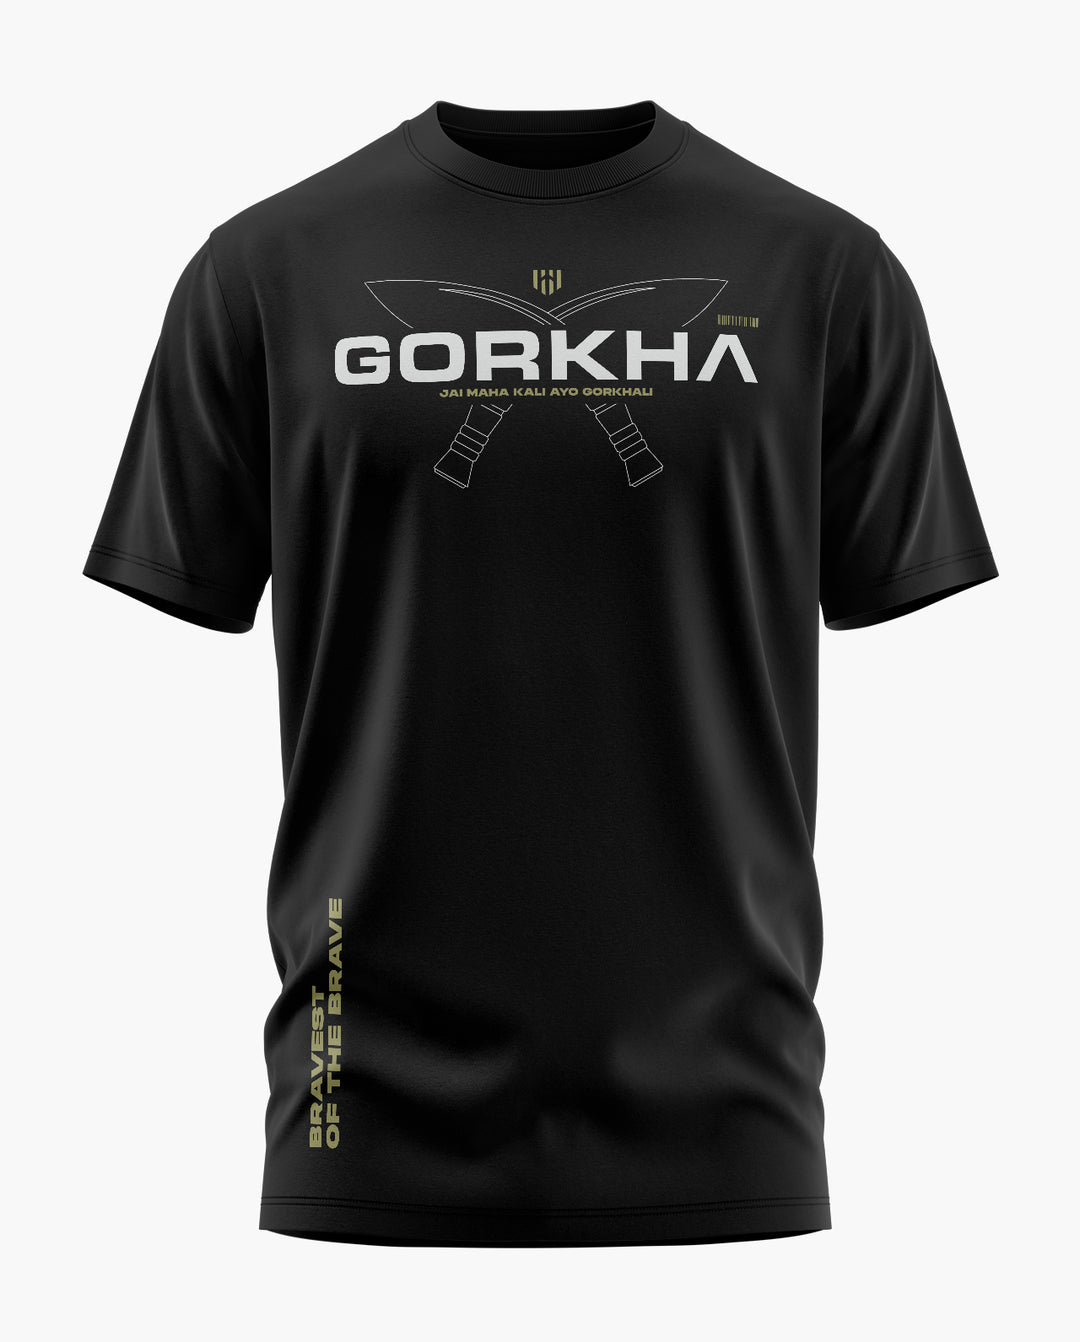 9th Gorkha Prestige T-Shirt - Aero Armour